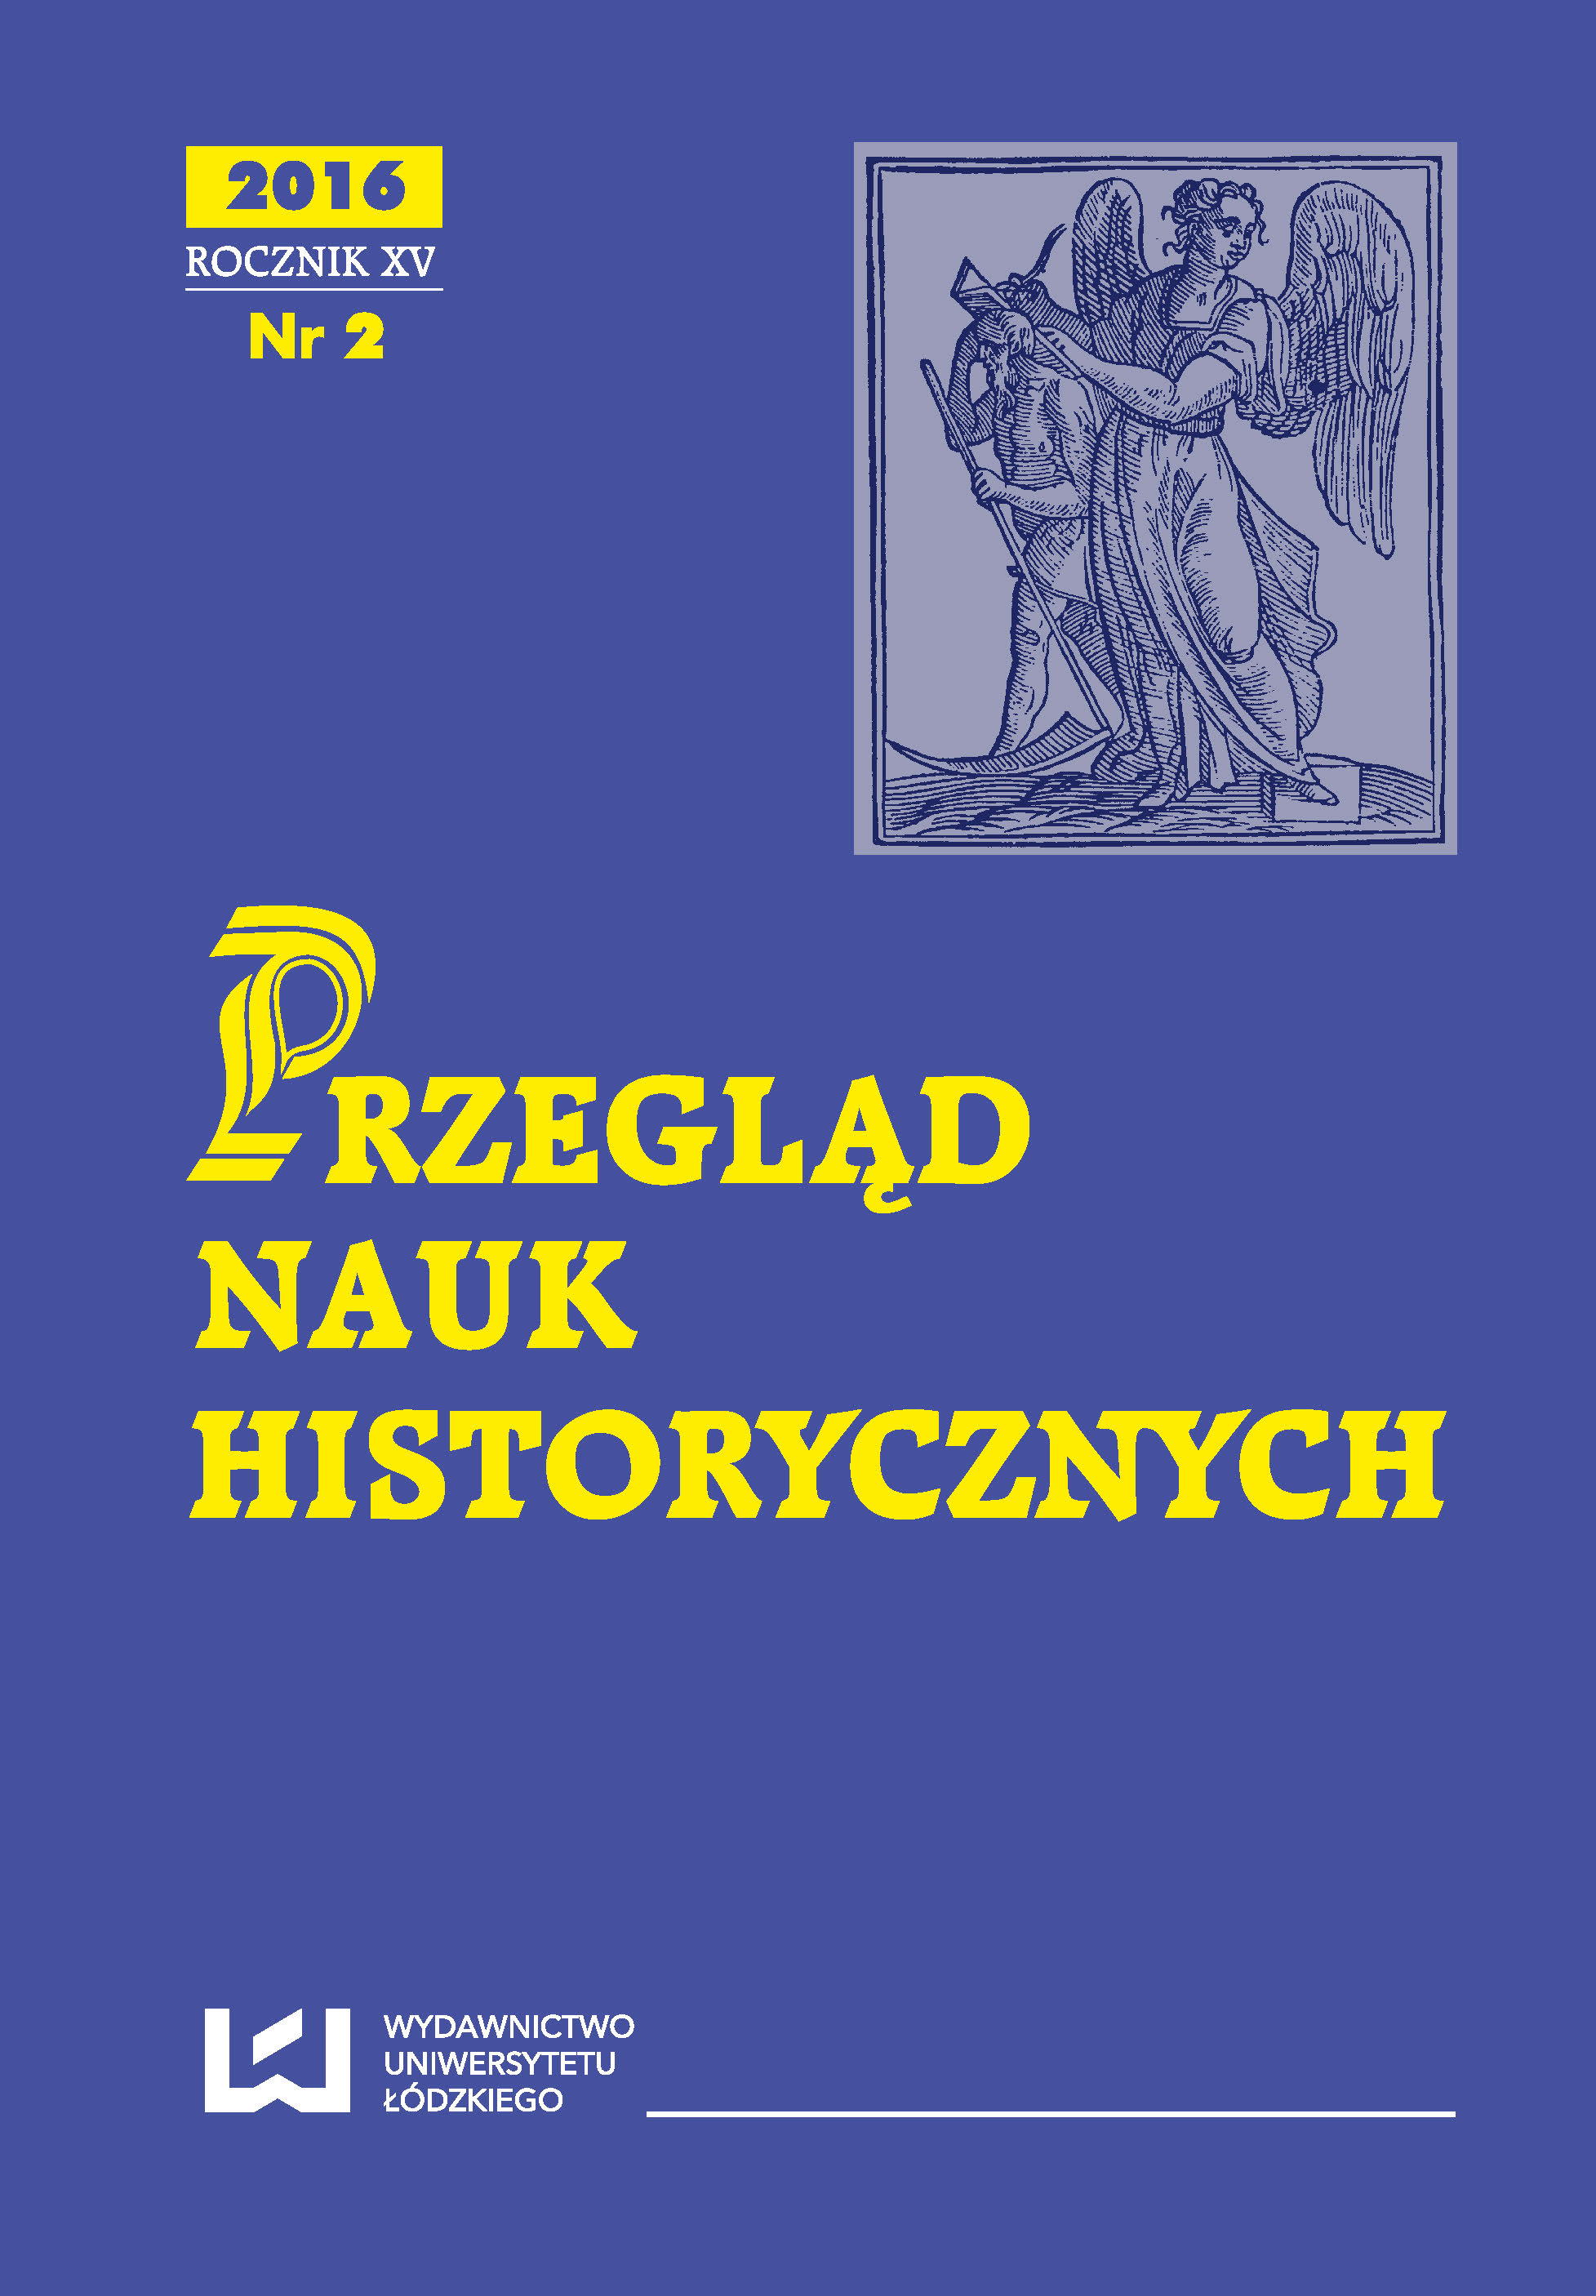 The ceremony of offering a festschrift to prof. Wanda Nowakowska, Łódź, 7 October, 2016 Cover Image